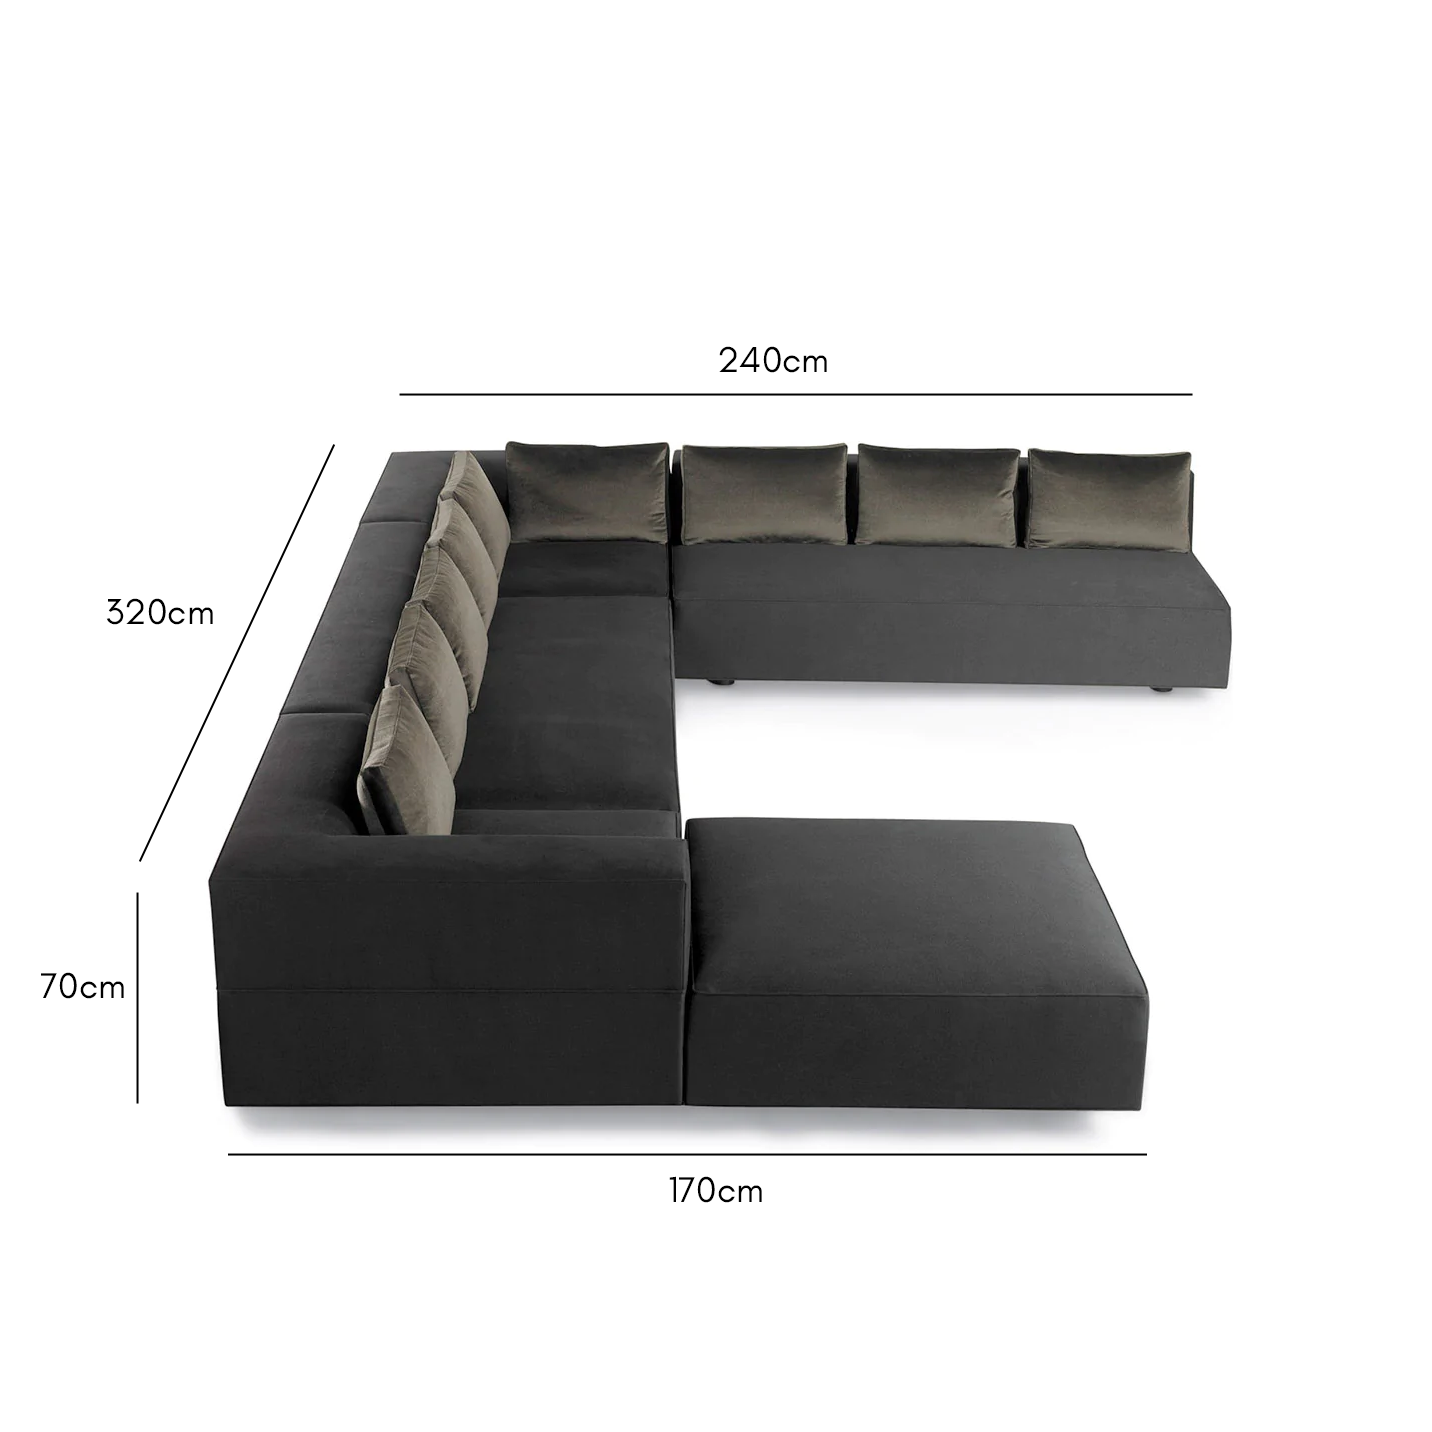 Beech wood corner sofa 320 x 240 cm - multiple colors - DECO242